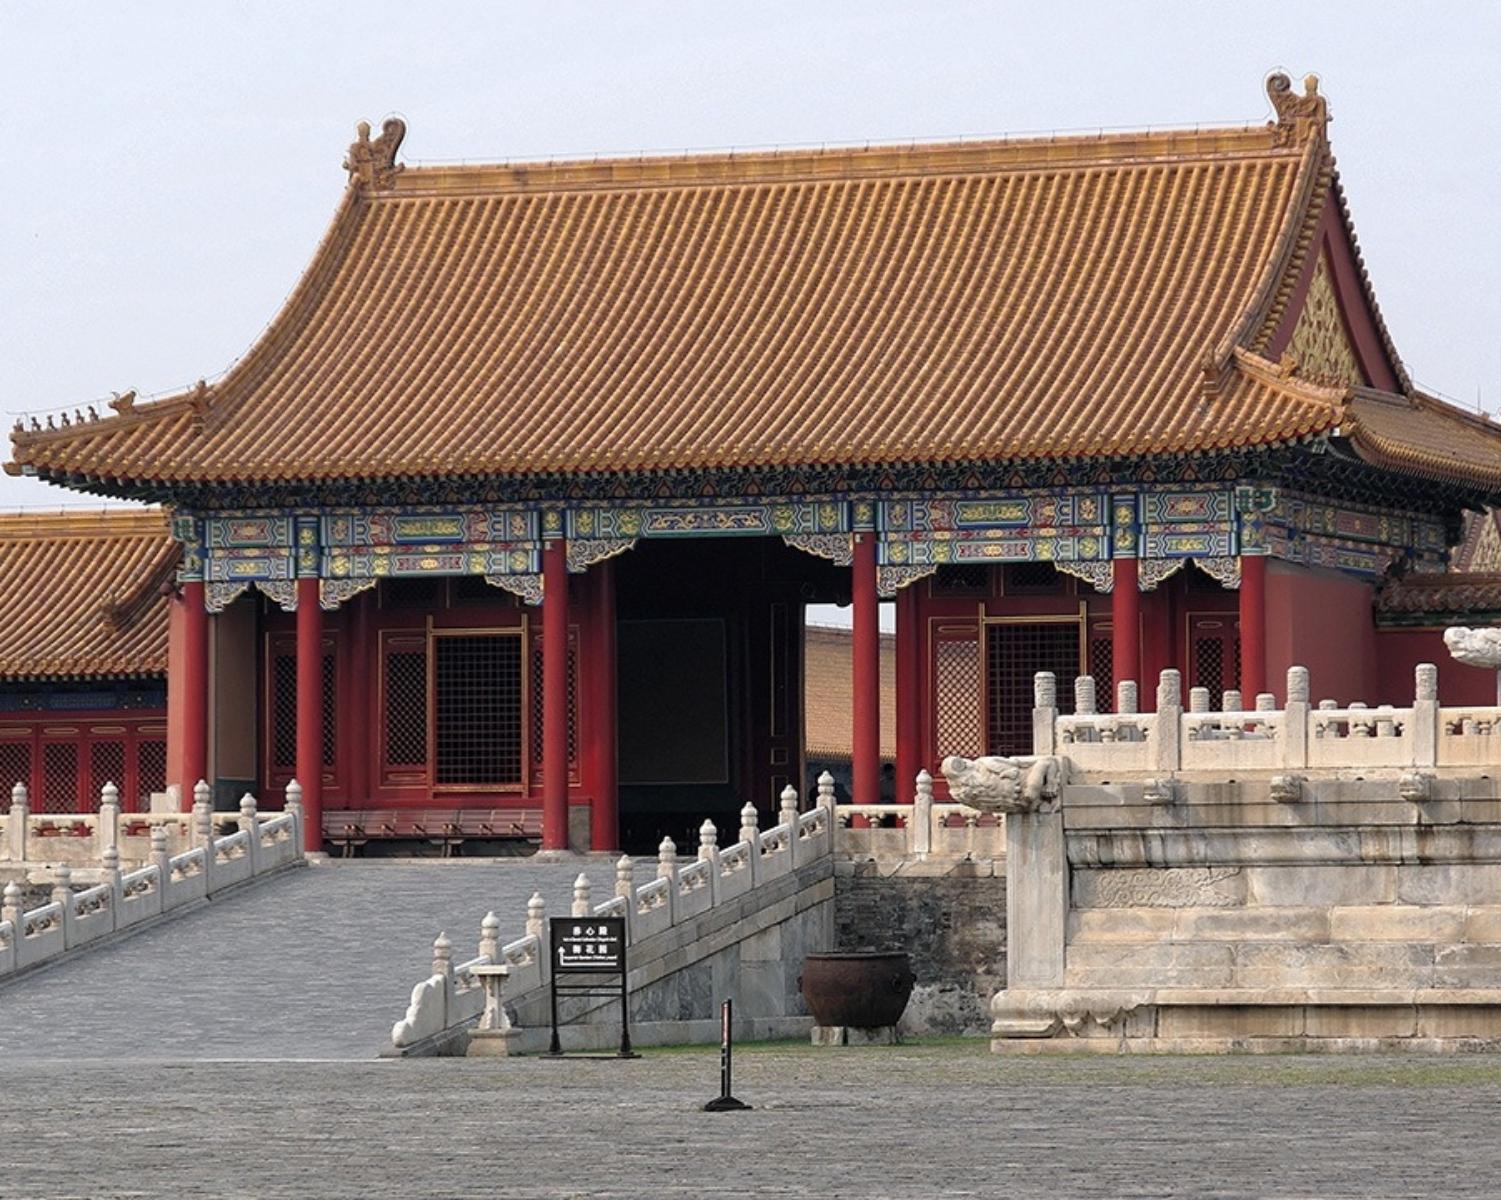 3. Forbidden City – Beijing, China